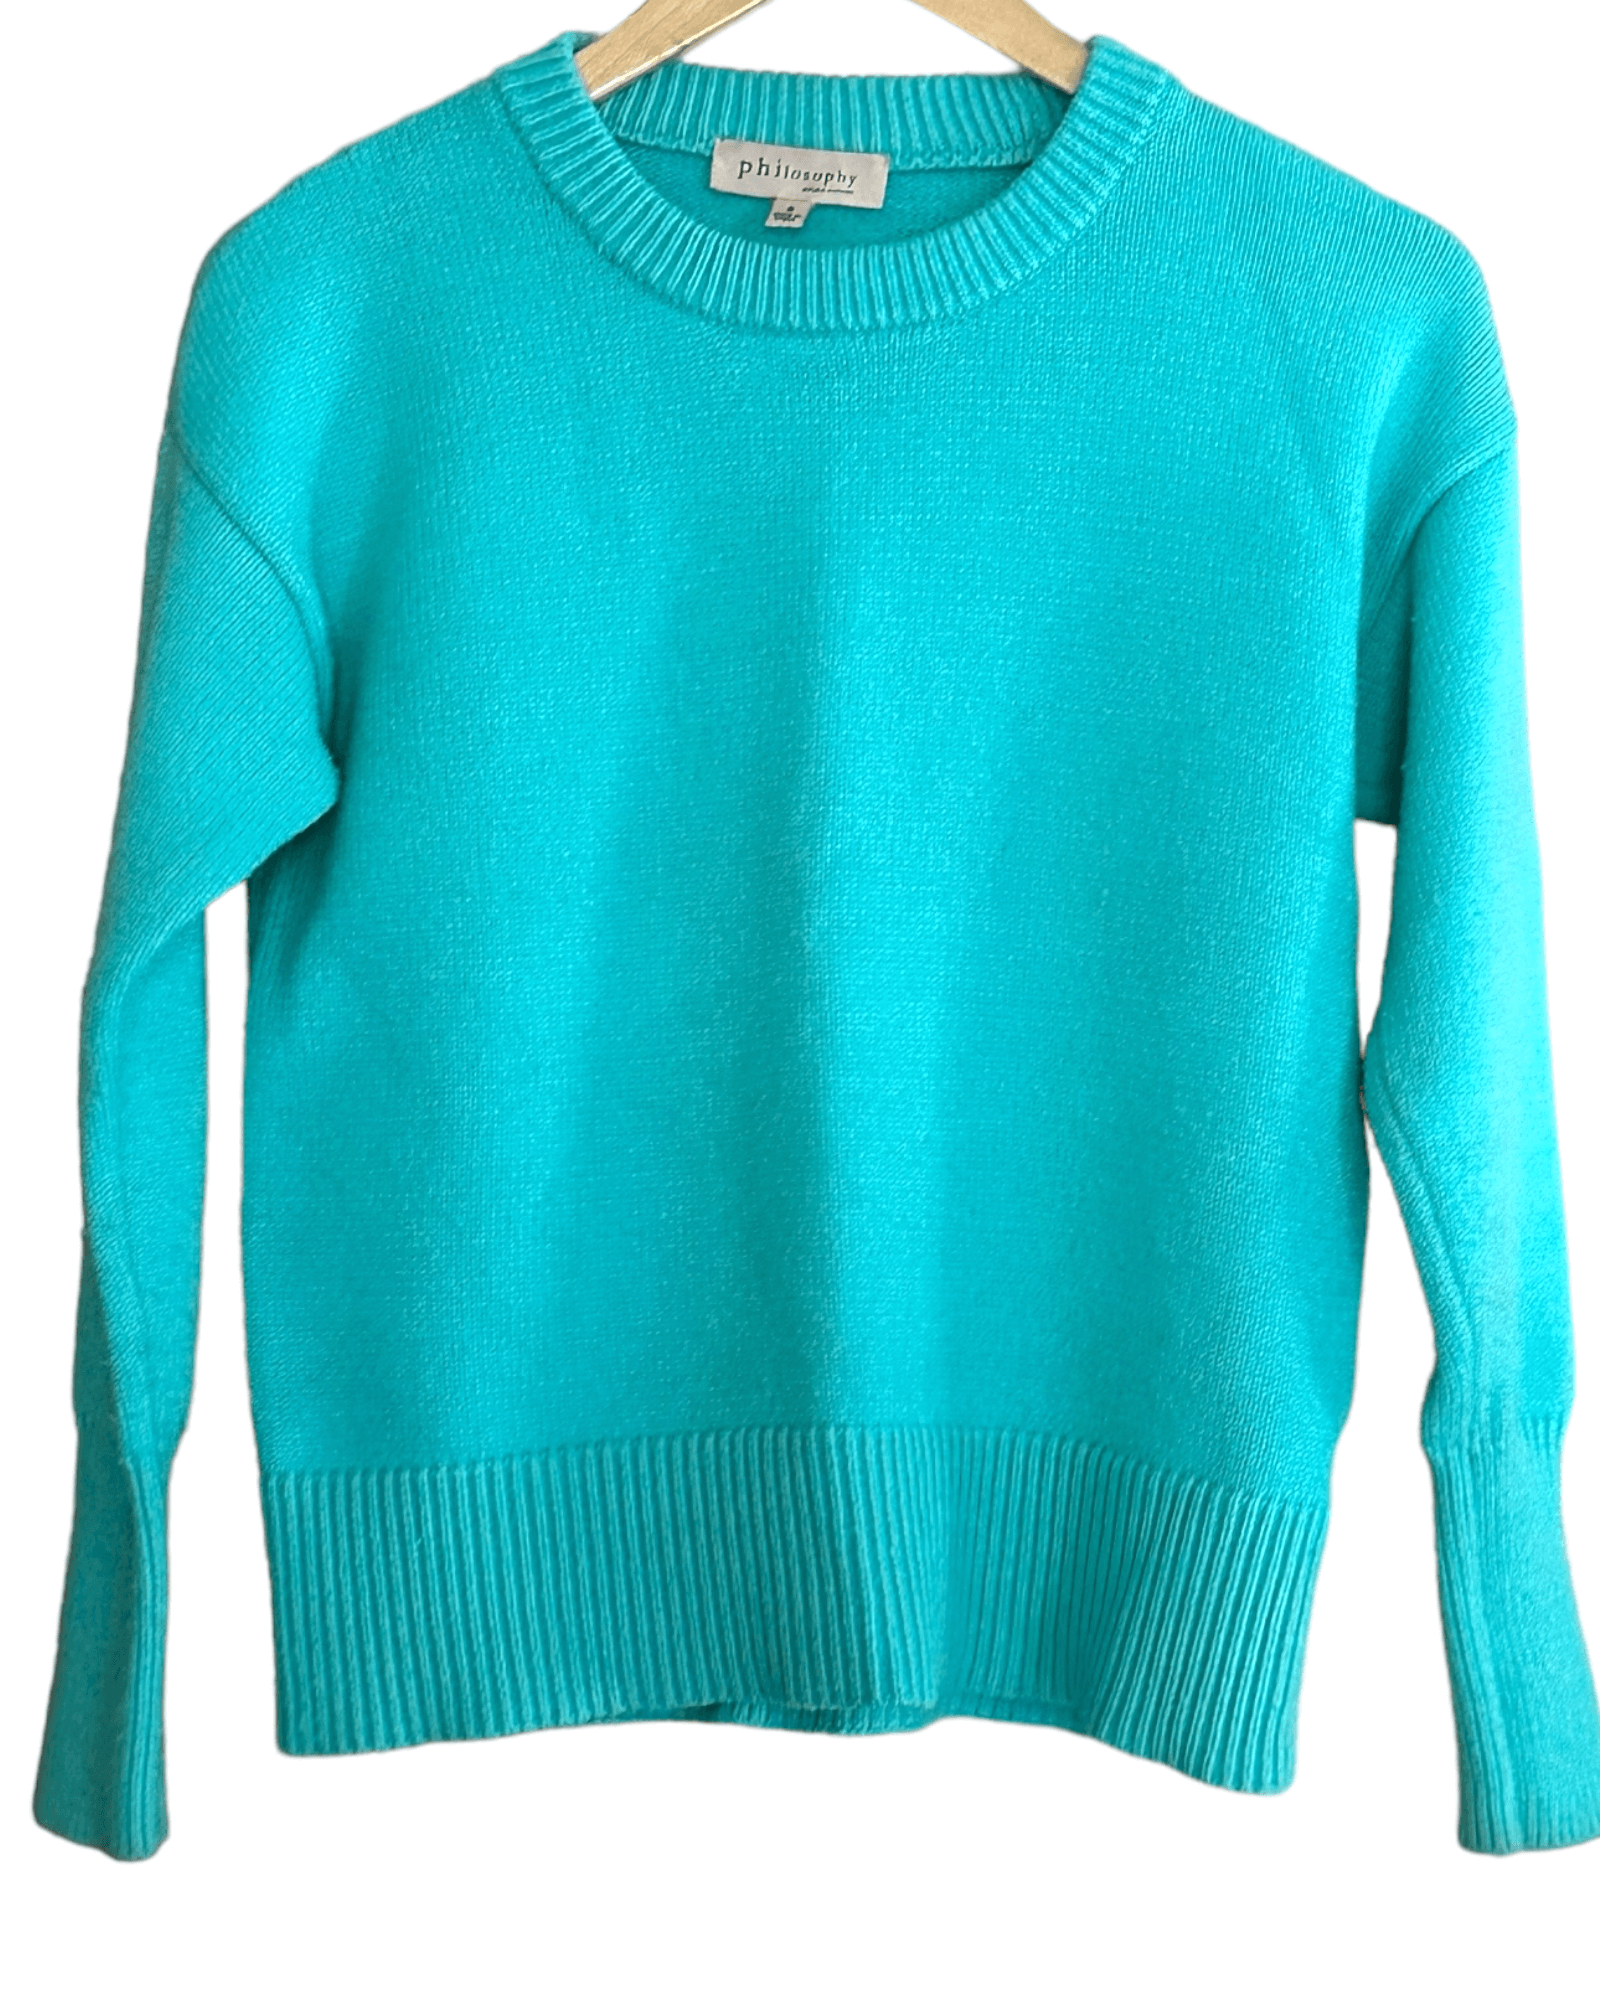 Cool Summer Philosophy capri blue crewneck pullover sweater